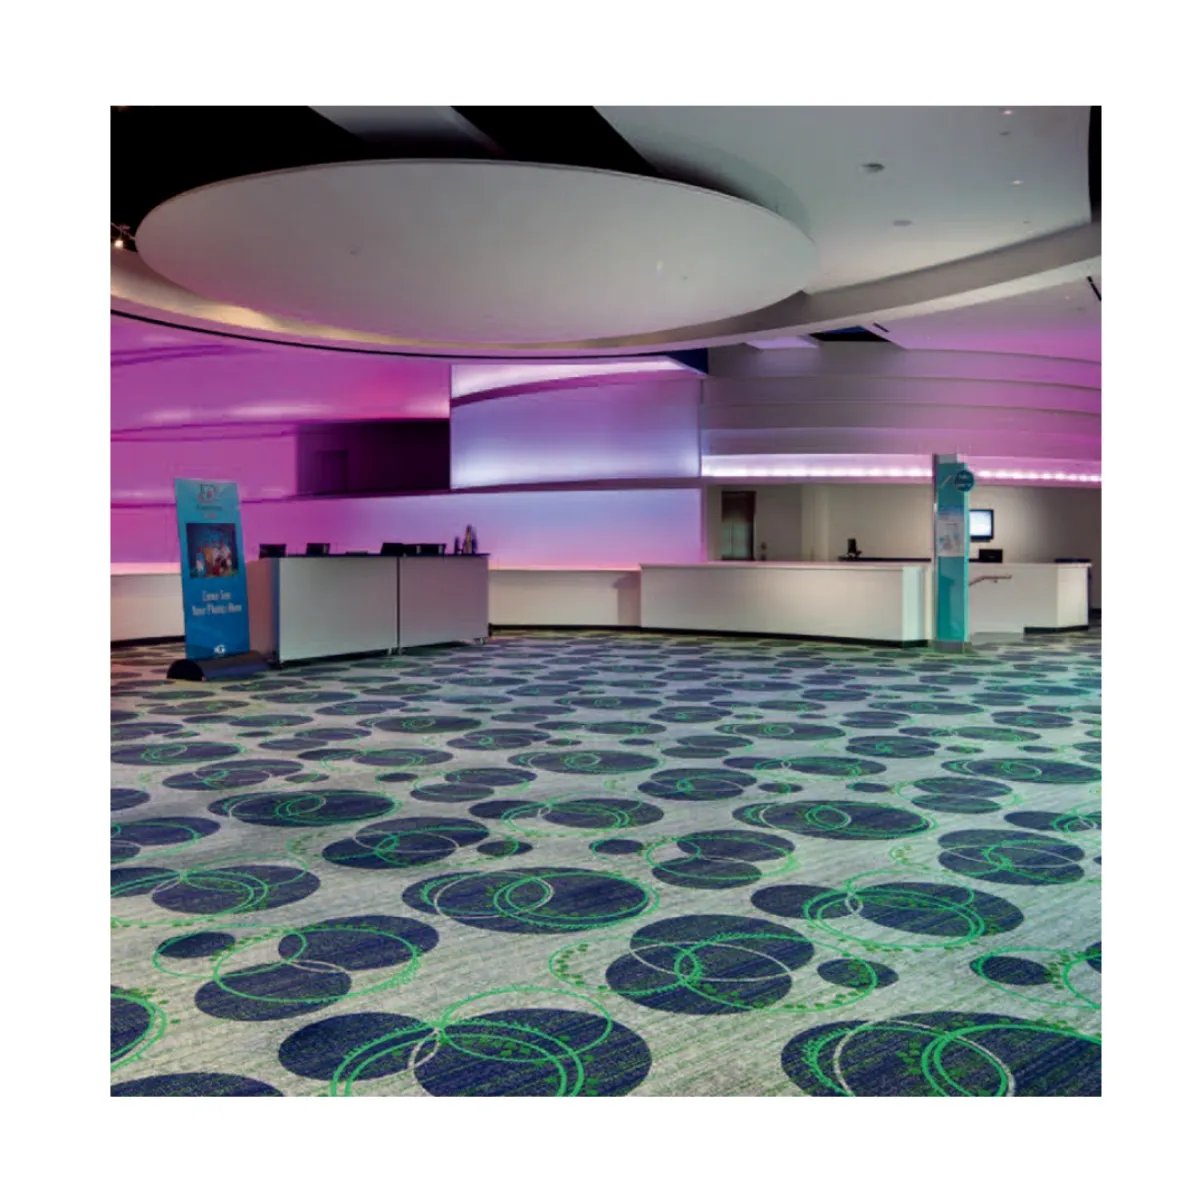 Kaili Luxury Hotel Corridor Slab Banquet Carpet 5 Star Hotel Guestroom Casino Ballroom Wall To Wall Carpets